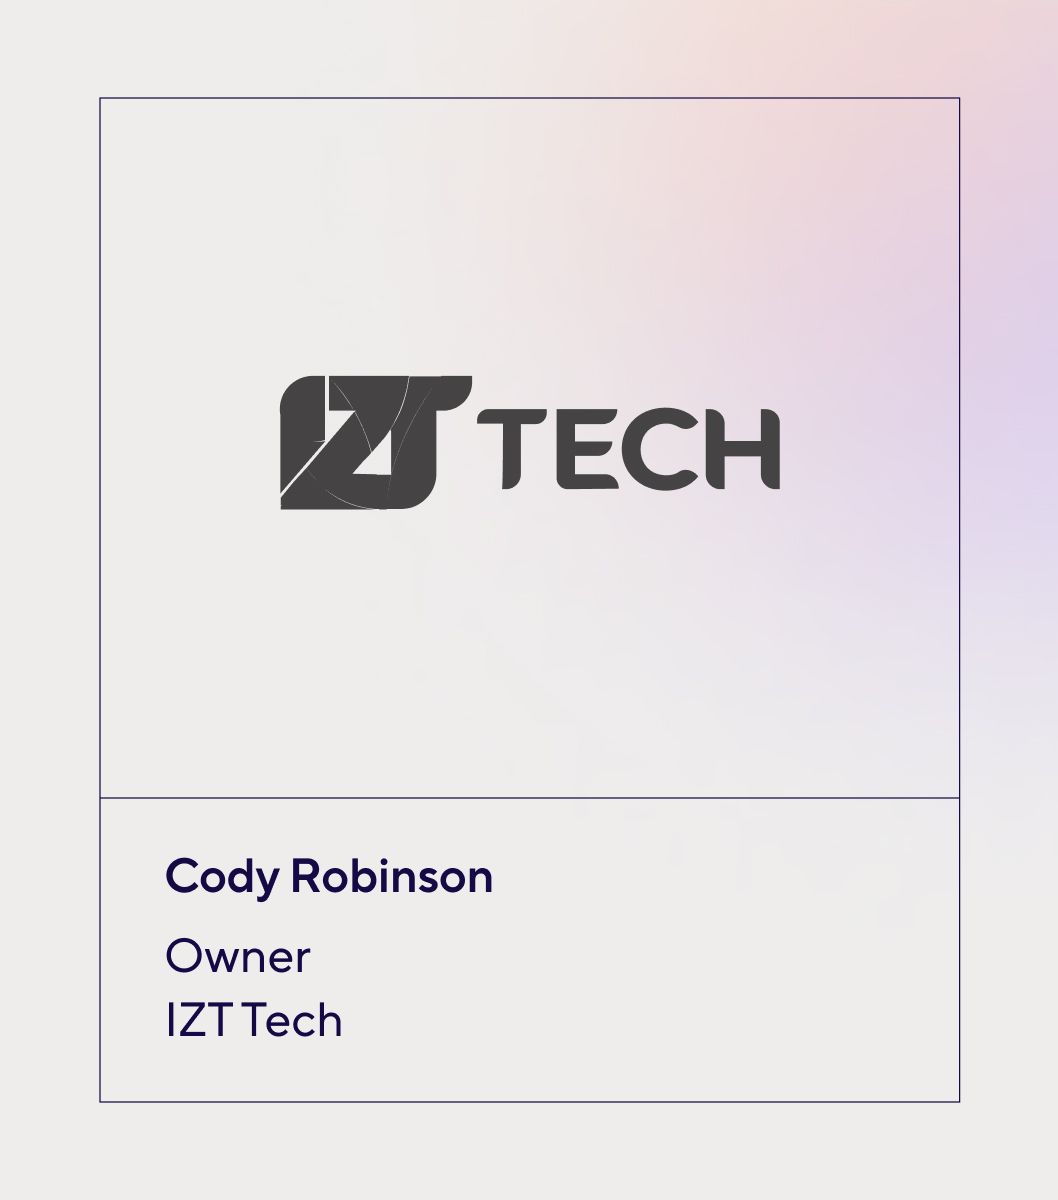 Card with IZT Tech logo